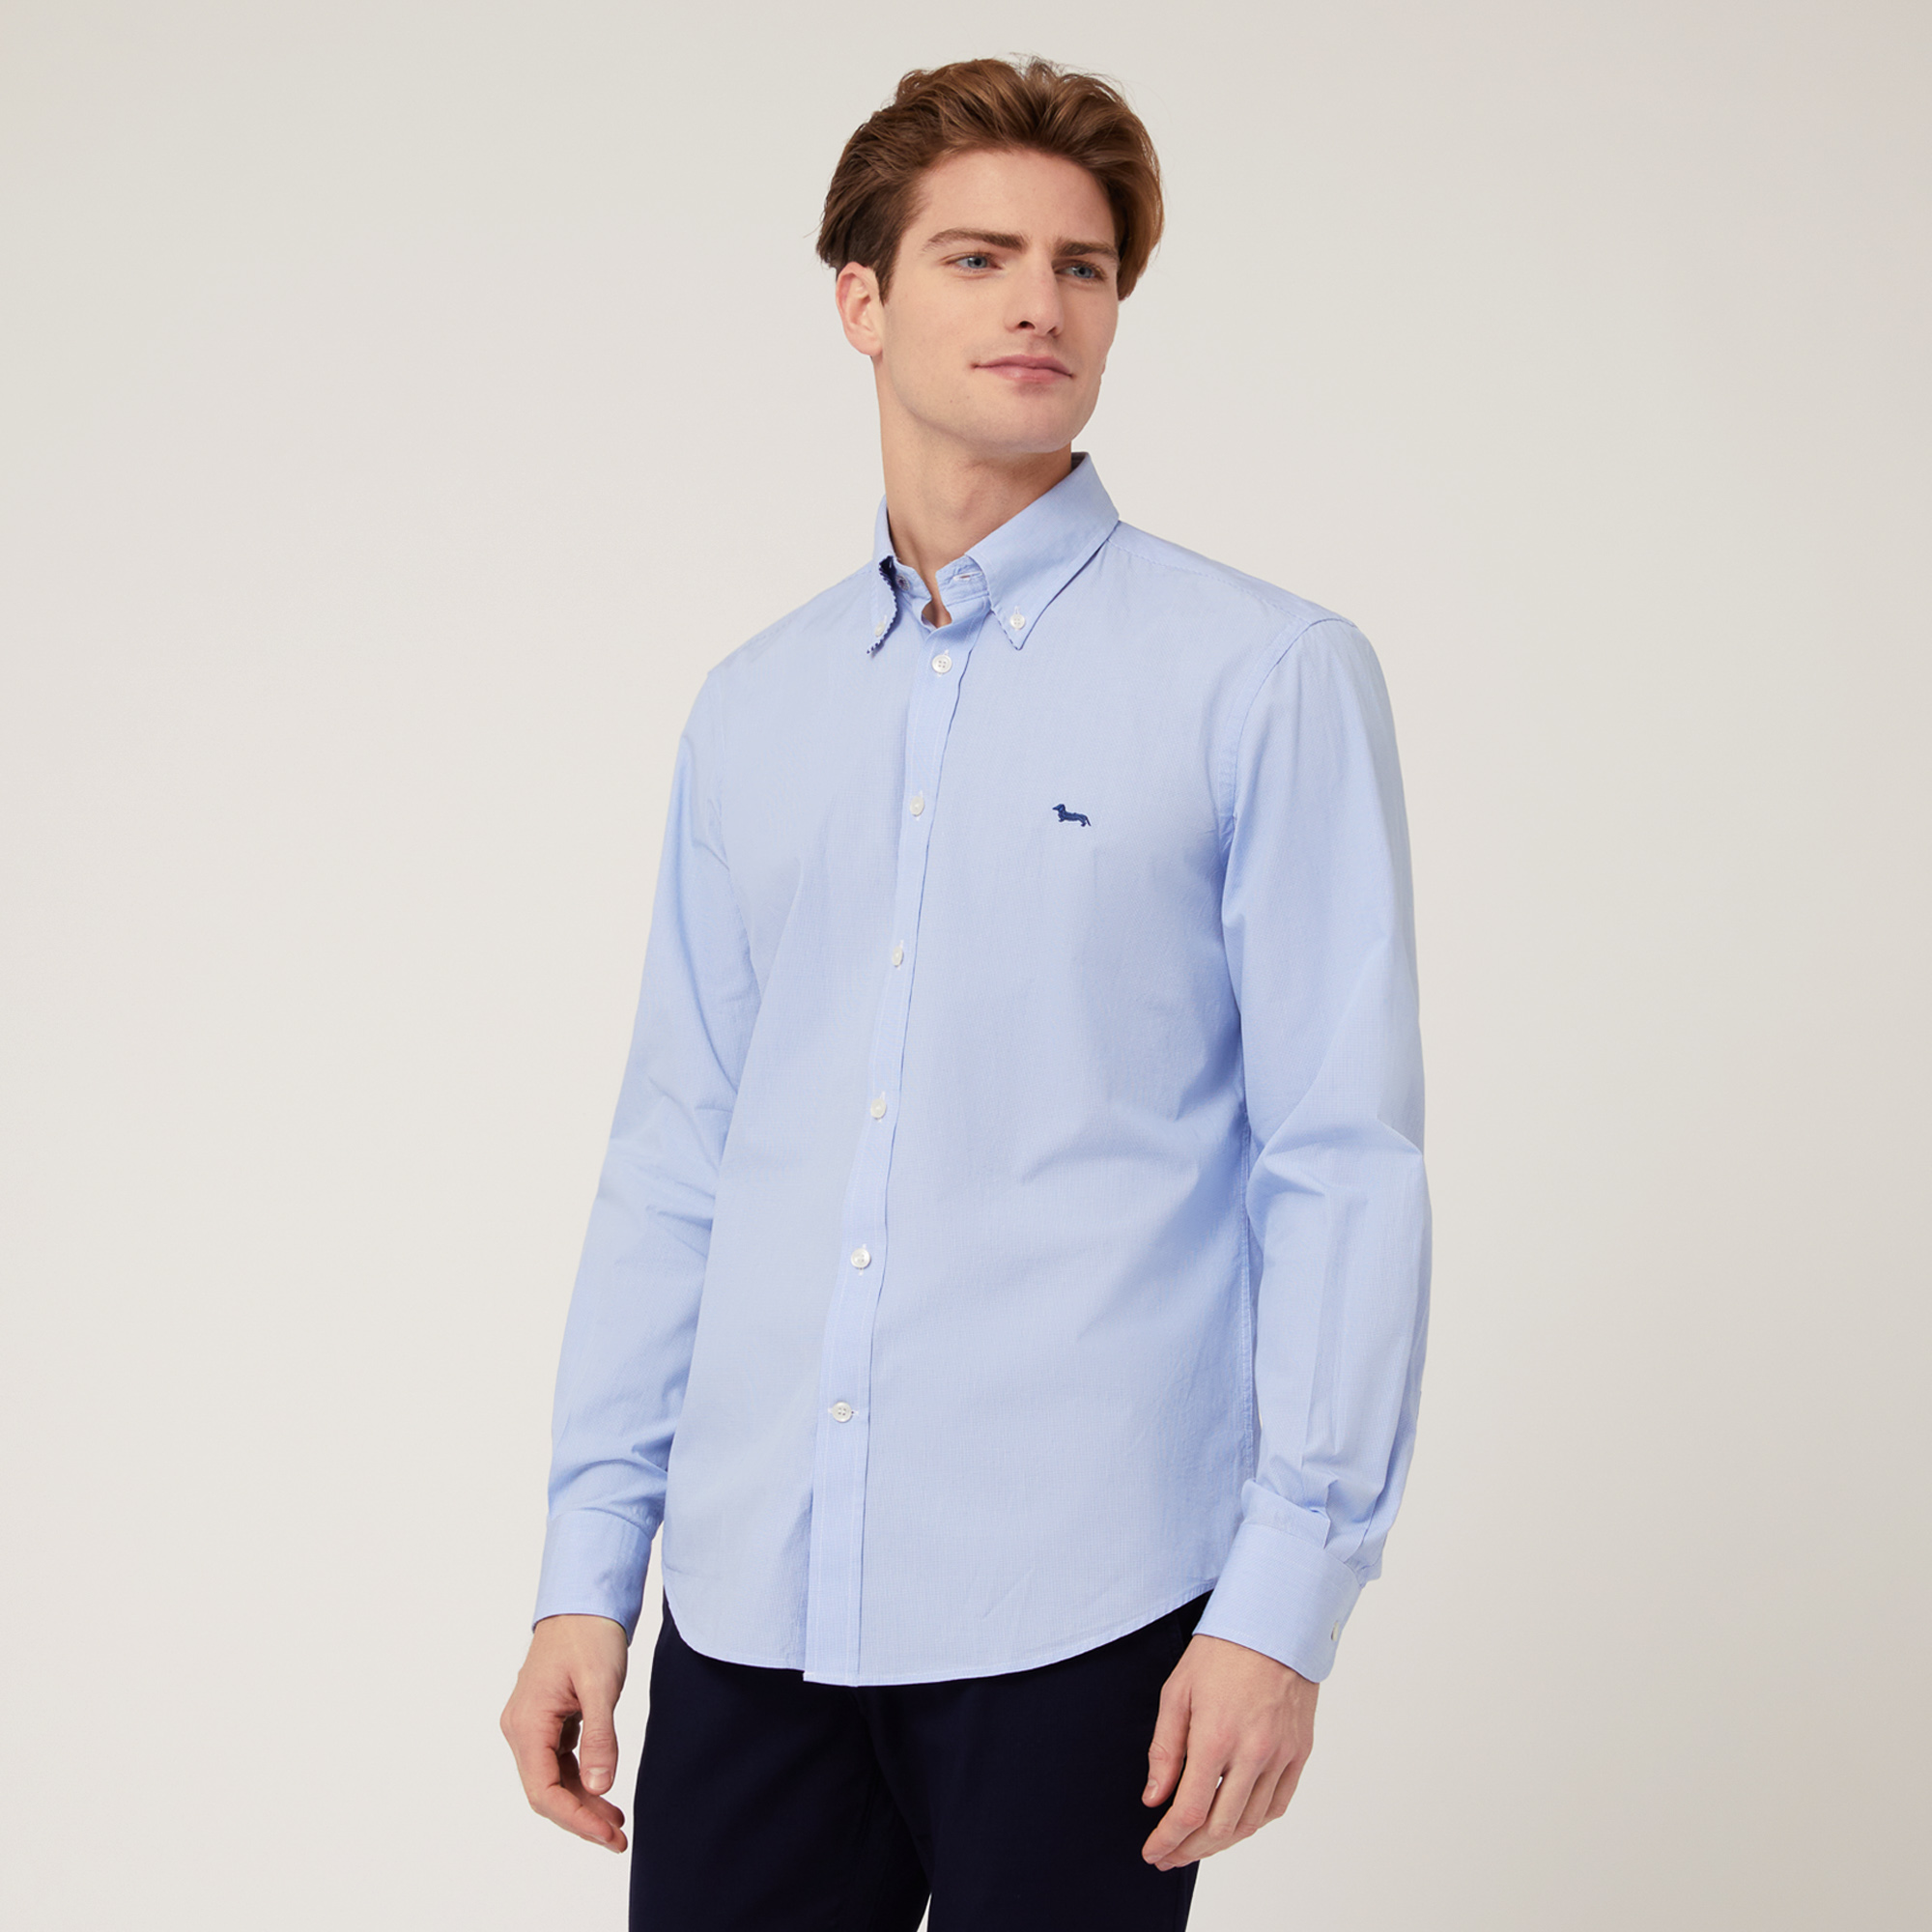 Premium Quality fashionable casual cotton shirt comfortable casual cotton  shirt for men-3004